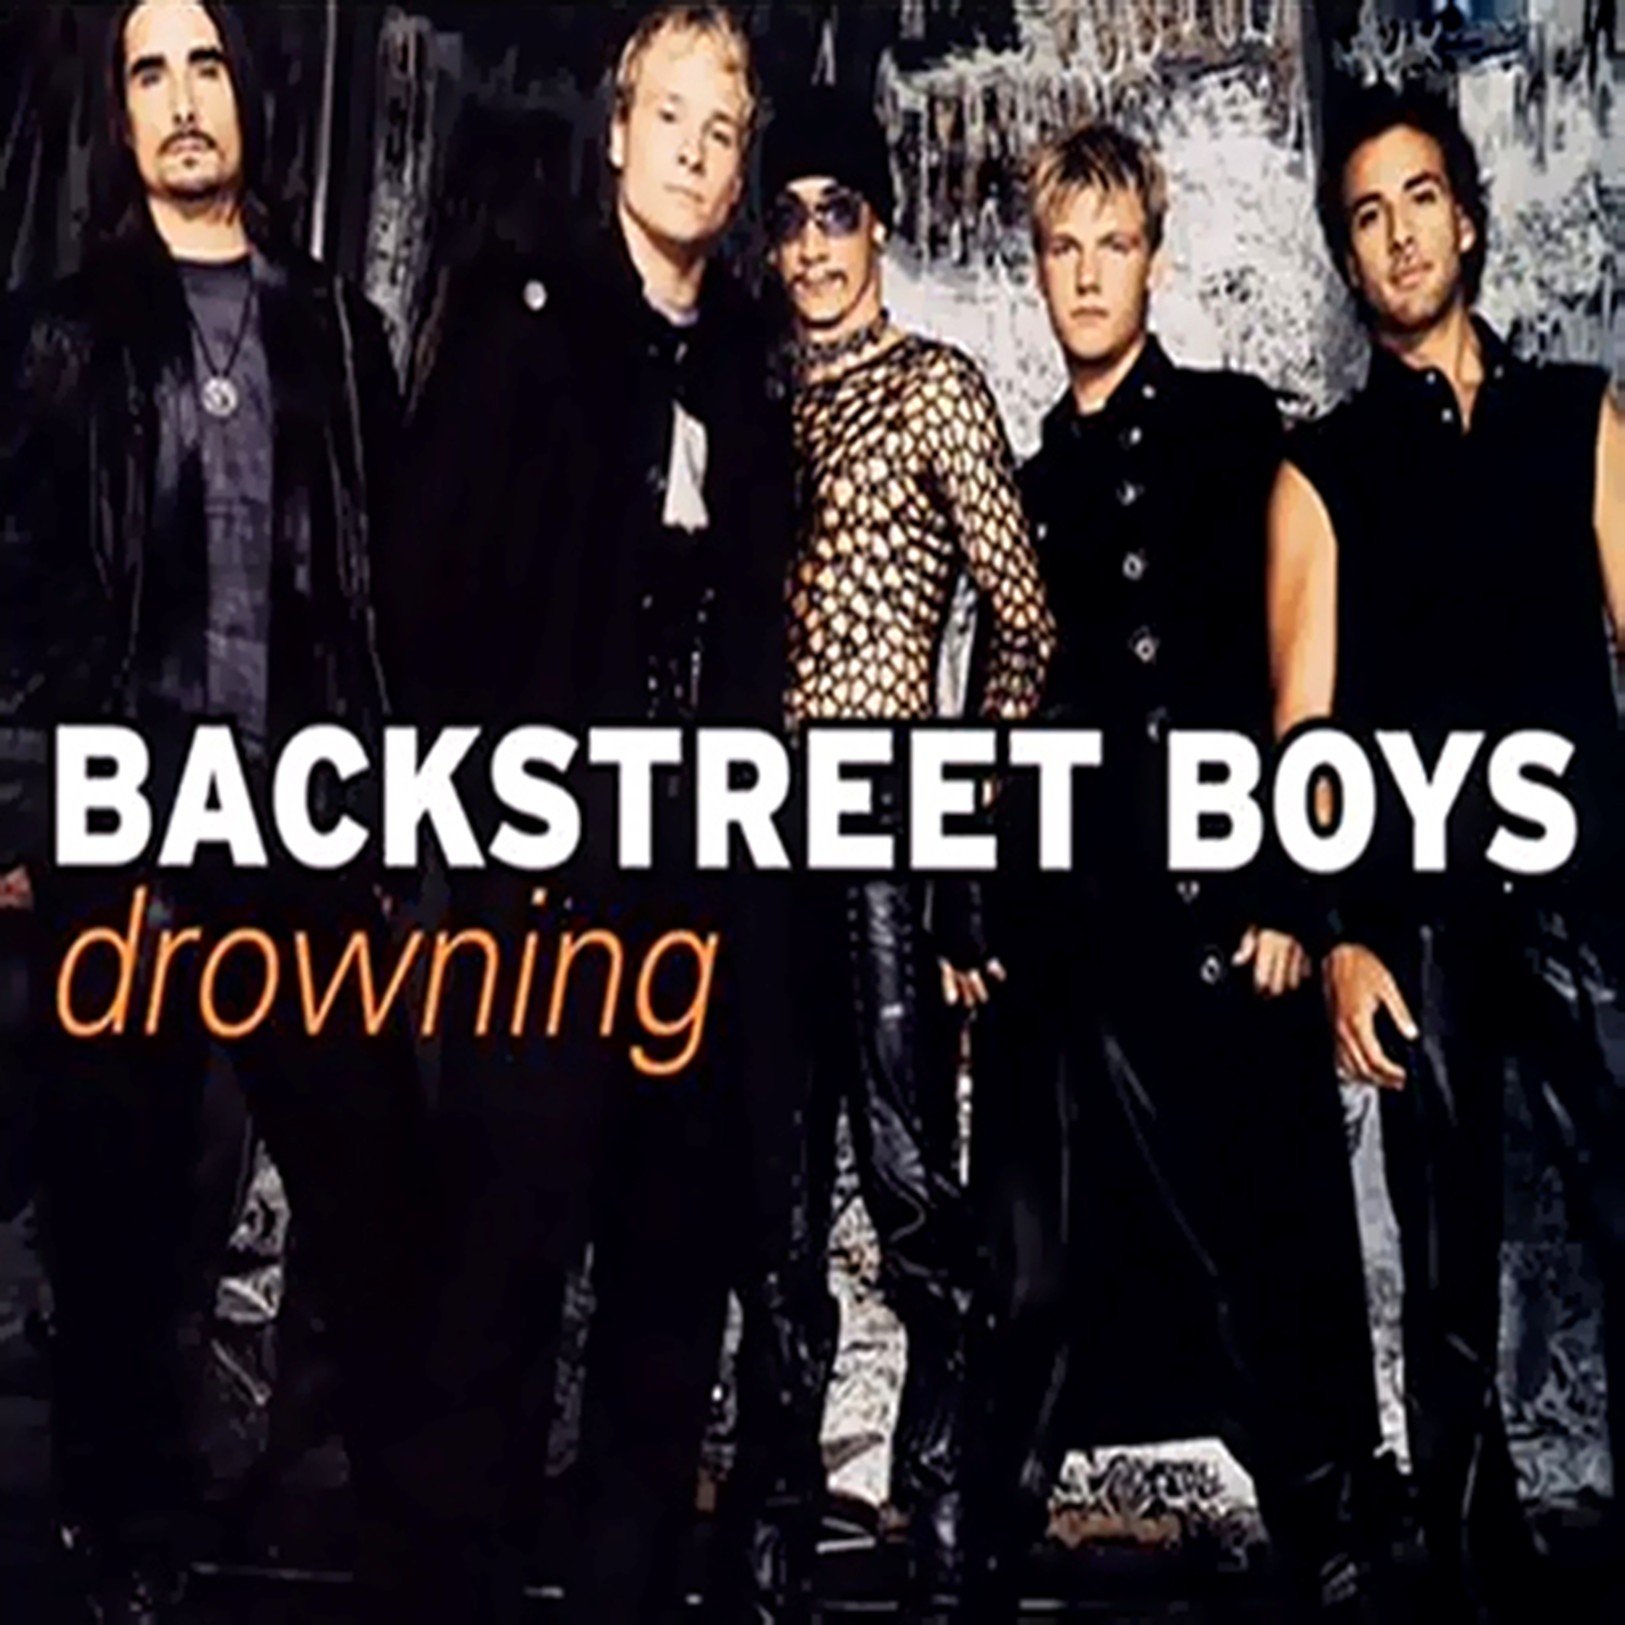 Boys мп3. Backstreet boys обложка. Бэкстрит бойс Drowning. Drowning Backstreet boys. Backstreet boys обложки альбомов.